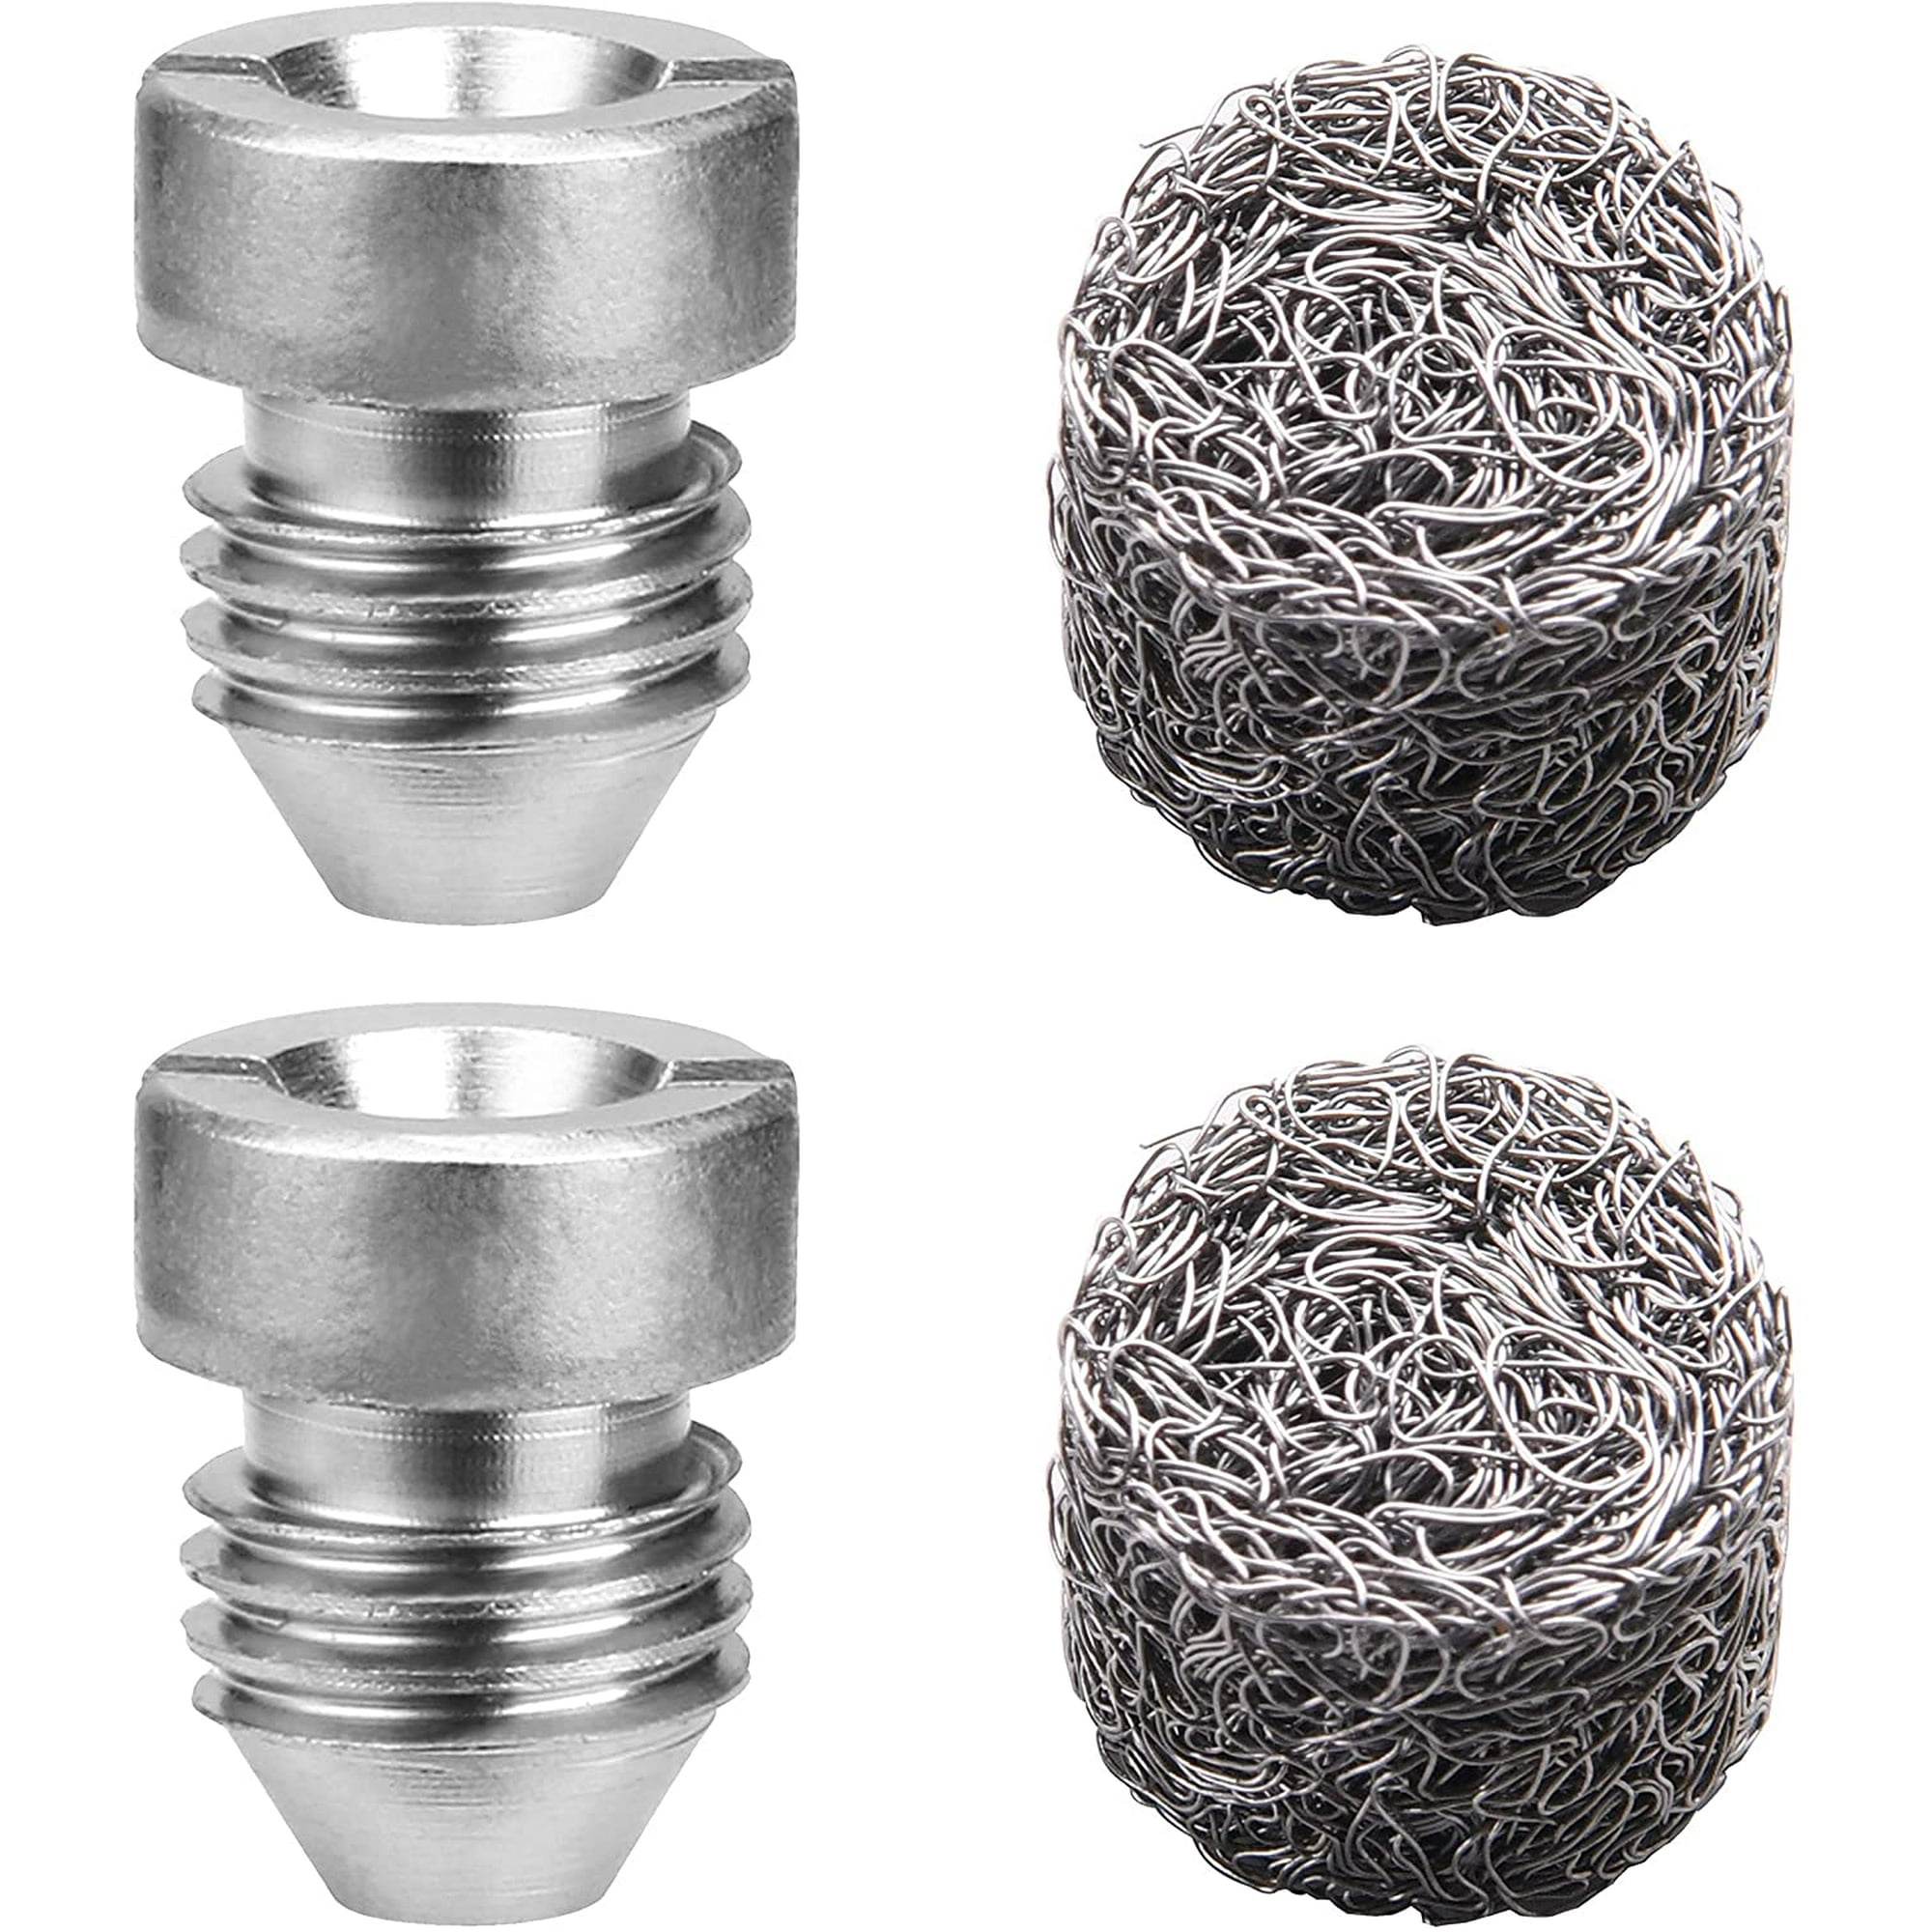 2 Thread Cannon Orifice Nozzle Tips Universal+Maker Filter for Snow Foam Lance